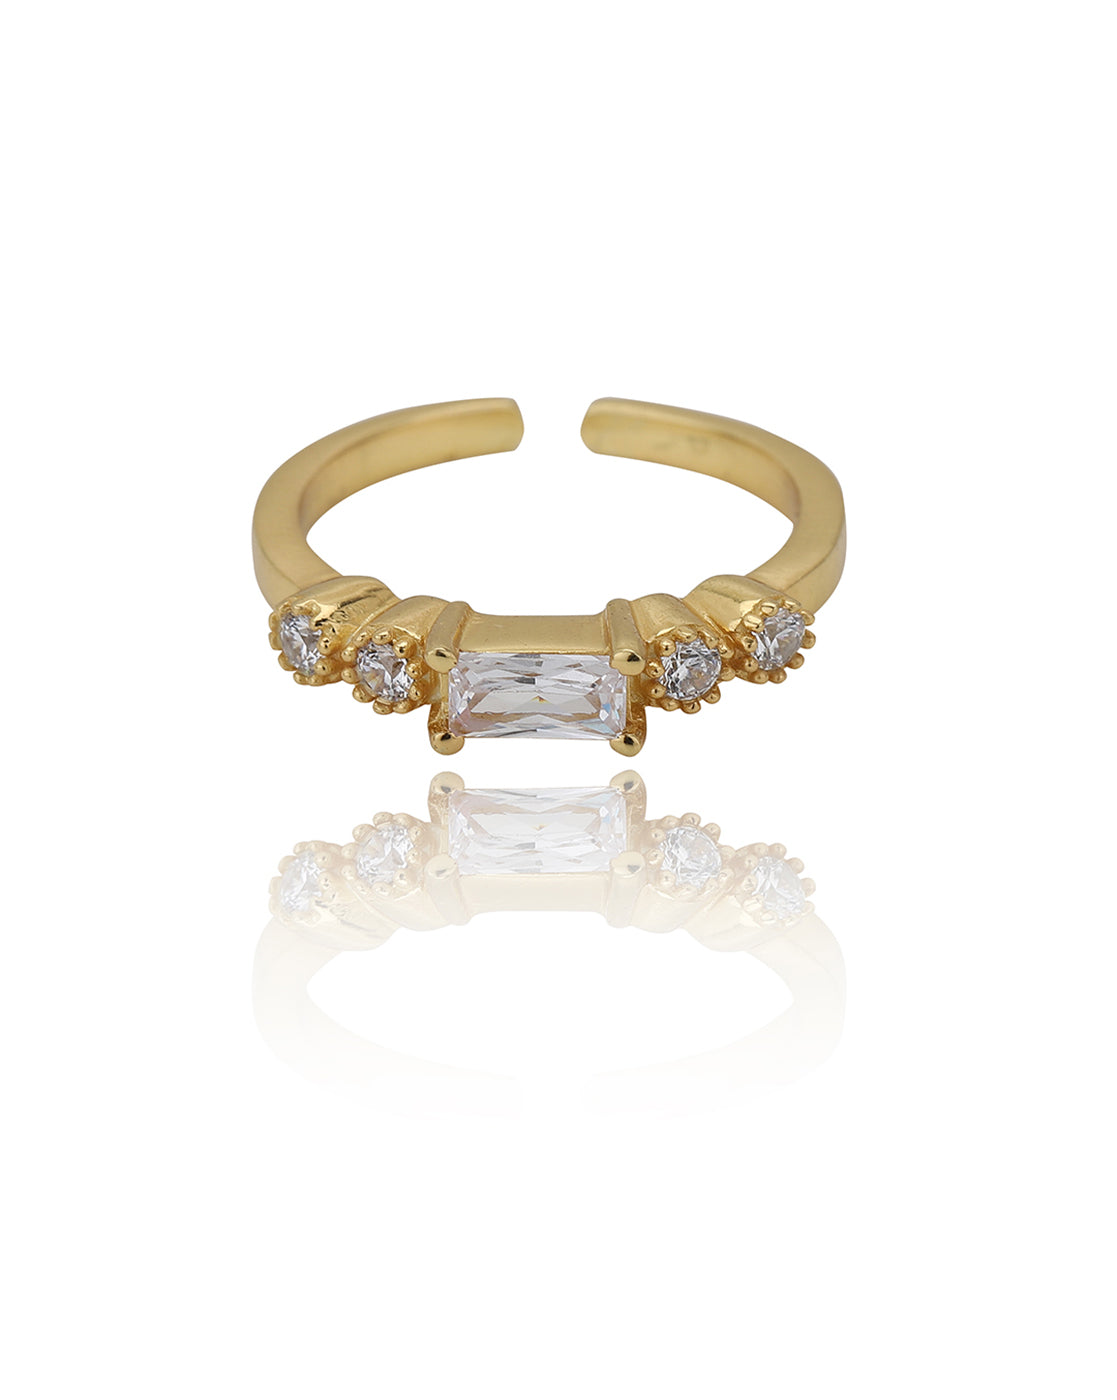 Carlton London Gold Plated Cz Studded Adjustable Finger Ring For Women